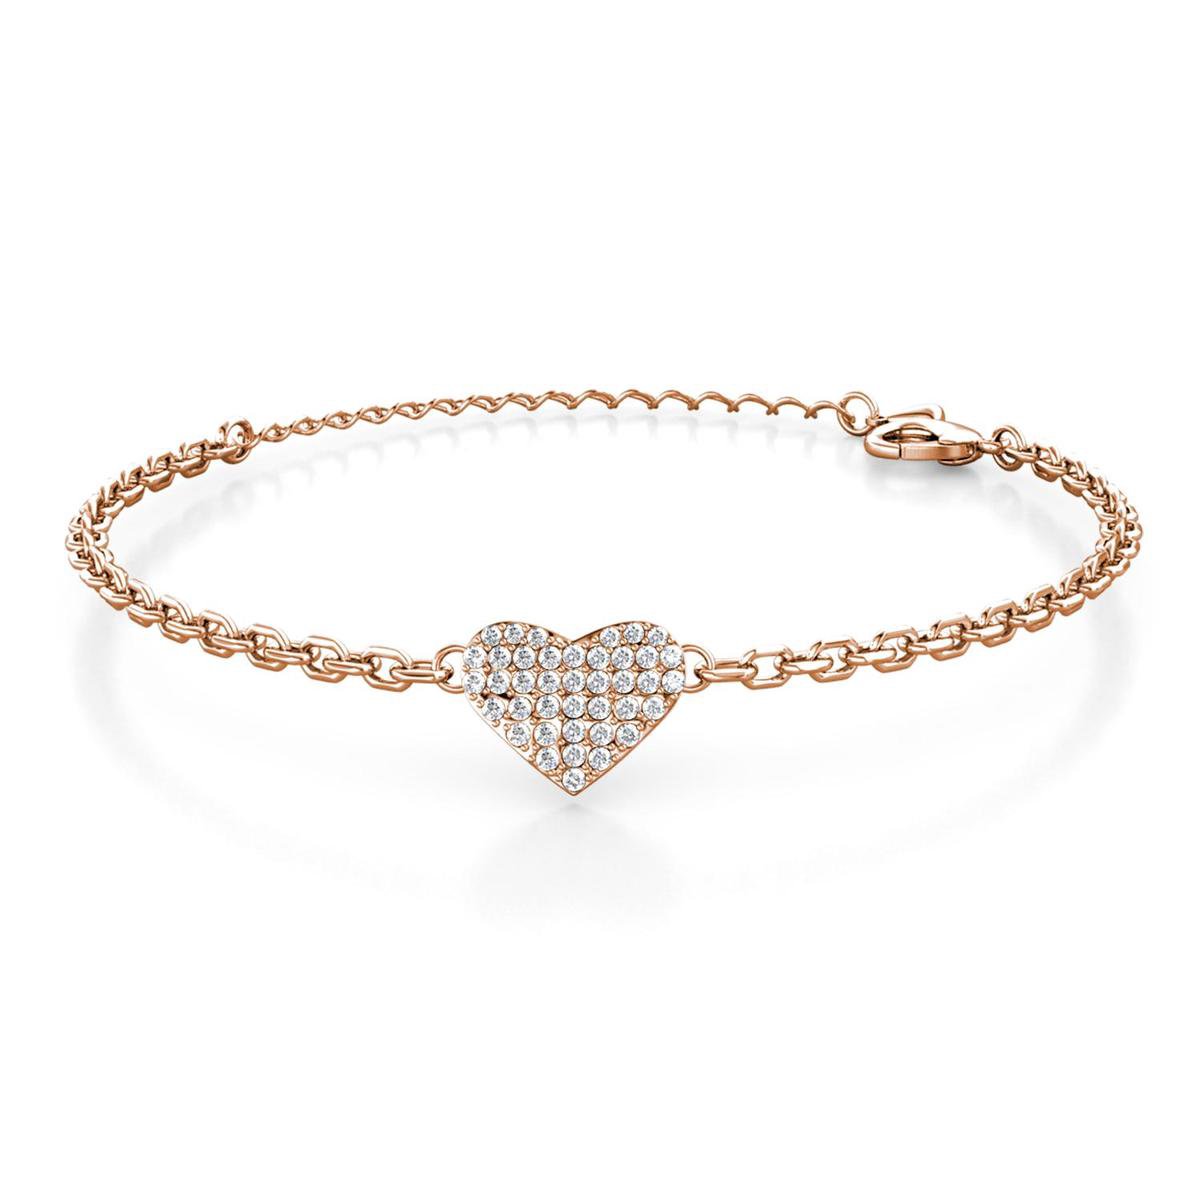 Shoplace Hart armband dames rond met Swarovski kristallen - 18K Rosegoud verguld – Swarovski armband - Cadeauverpakking - 20cm - Rose goud - Valentijn cadeautje voor haar